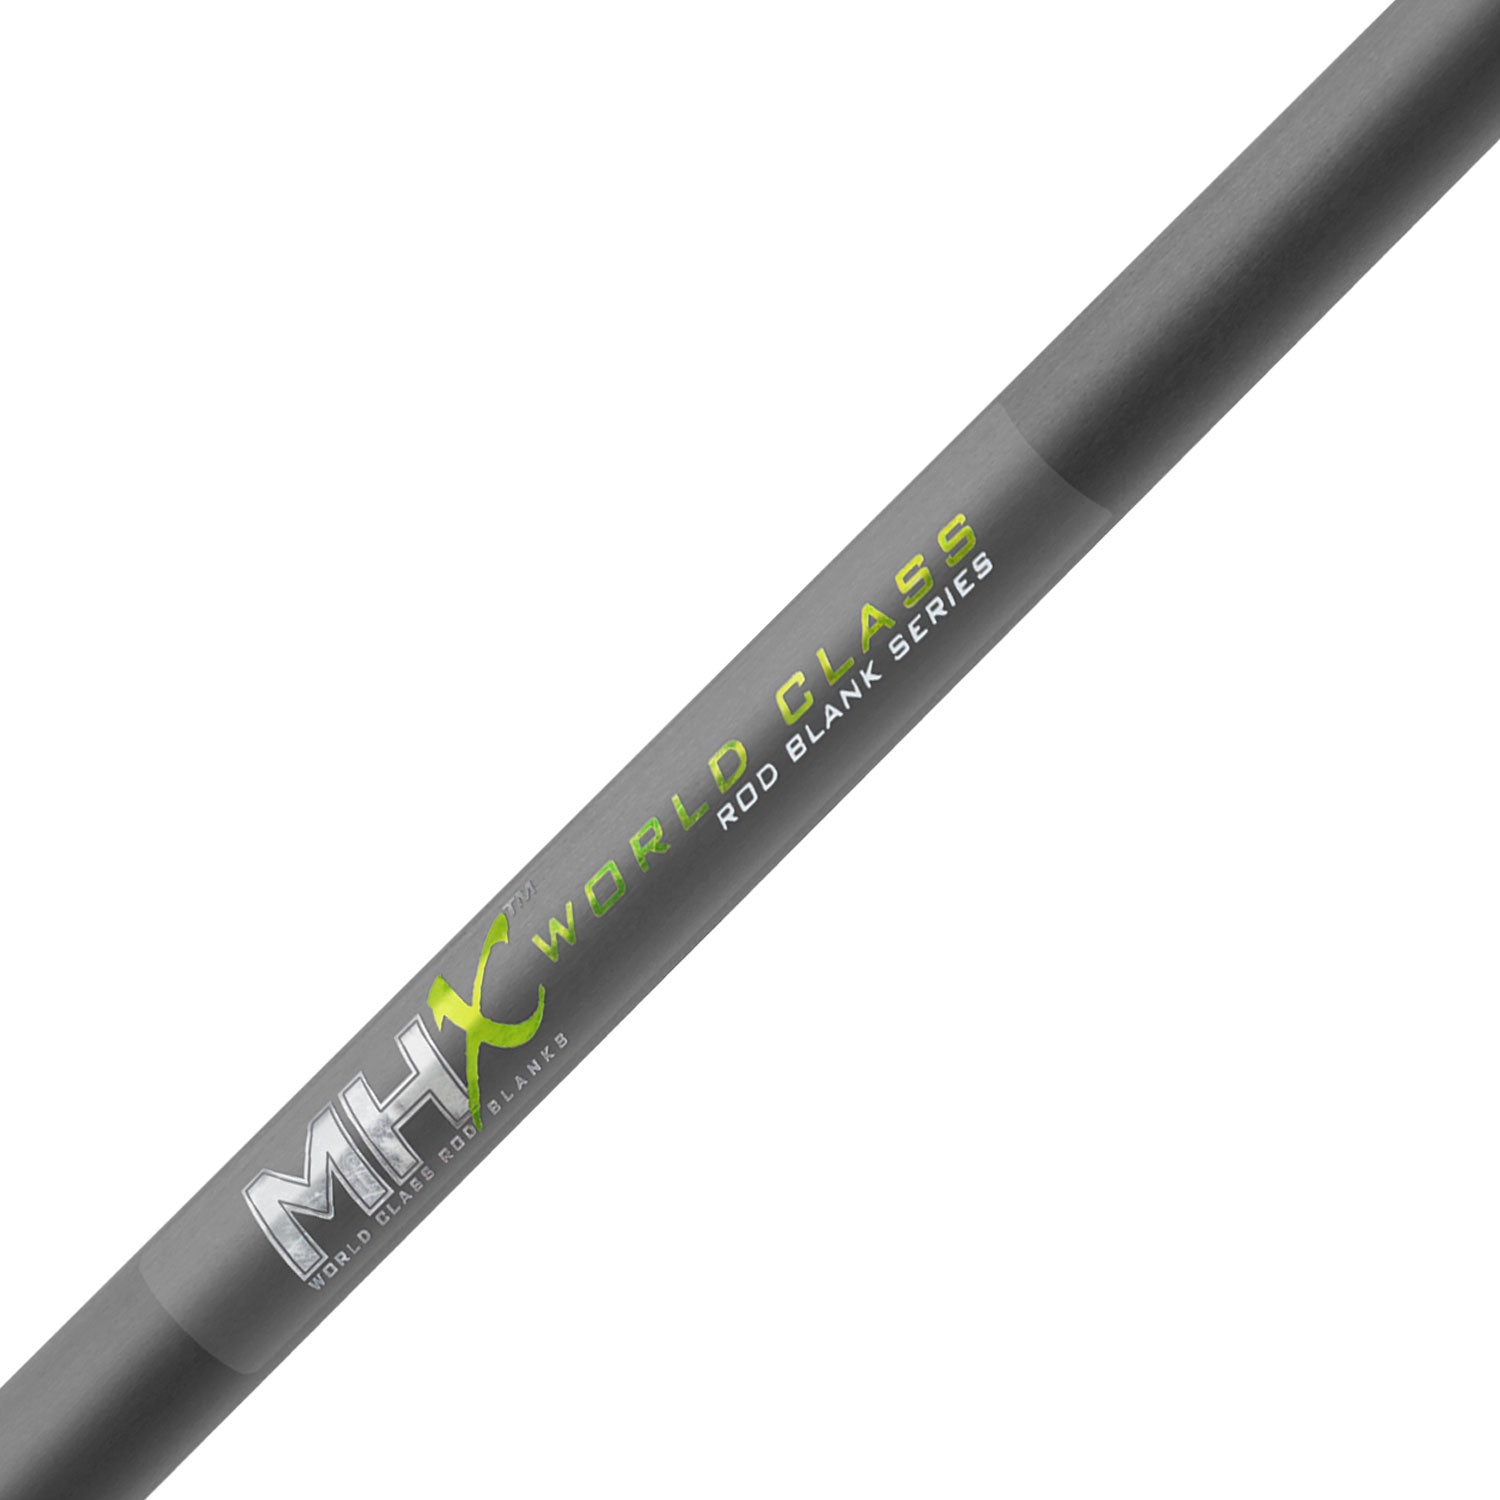 MHX 7'0 Medium Crankbait Rod Blank - CB843-Blend